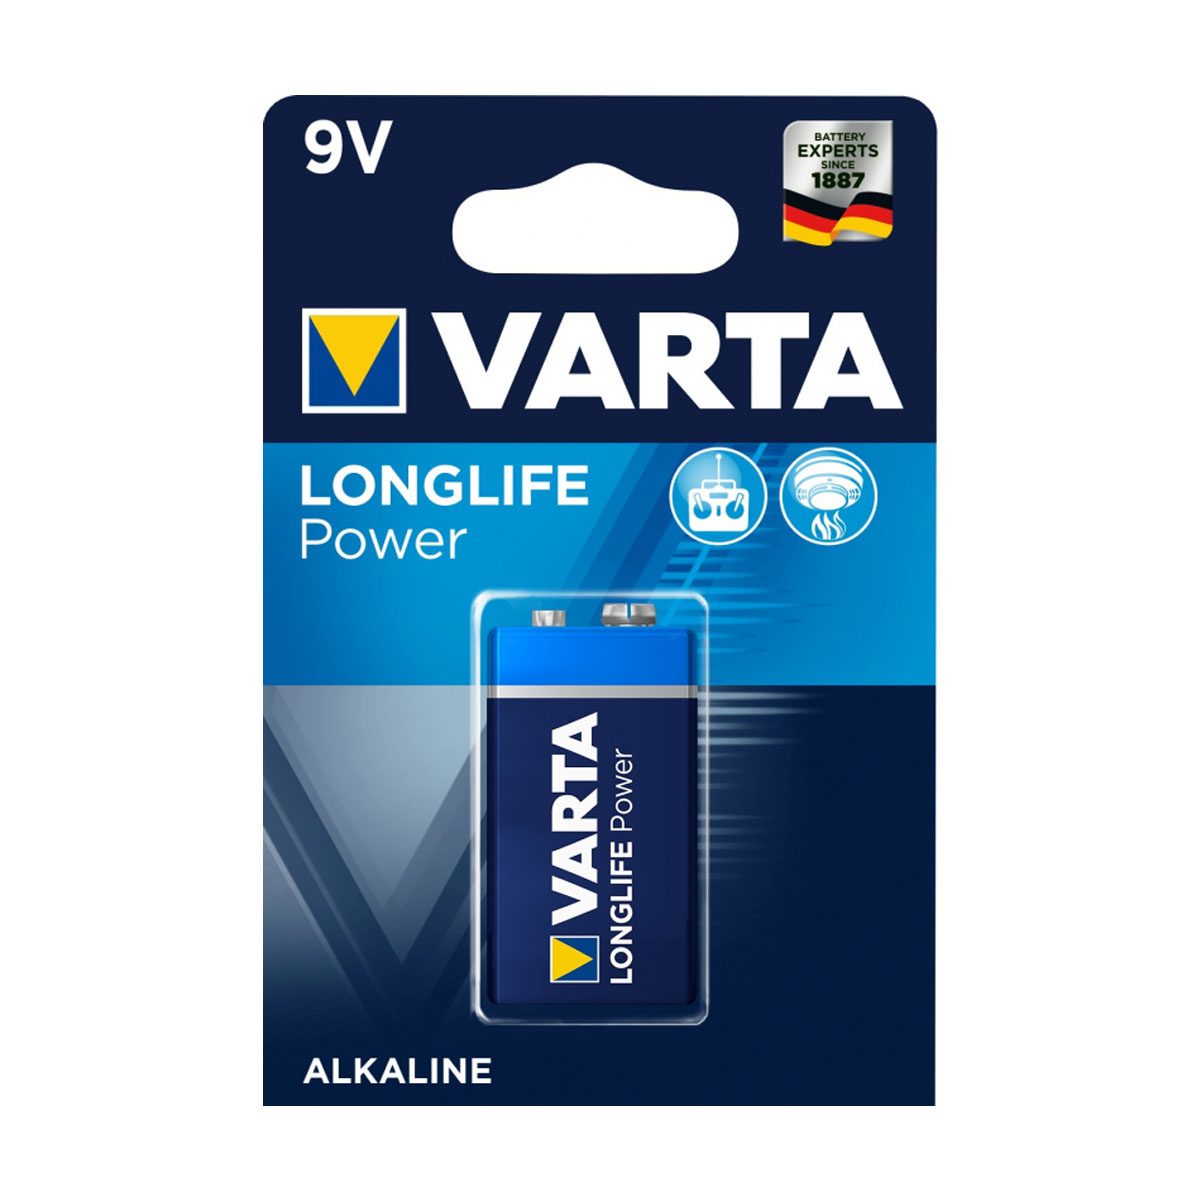 Батарейка VARTA LONGLIFE POWER 9V 6LR61/6LF22 BL-1 (4922) (1/10/50), алкалиновая